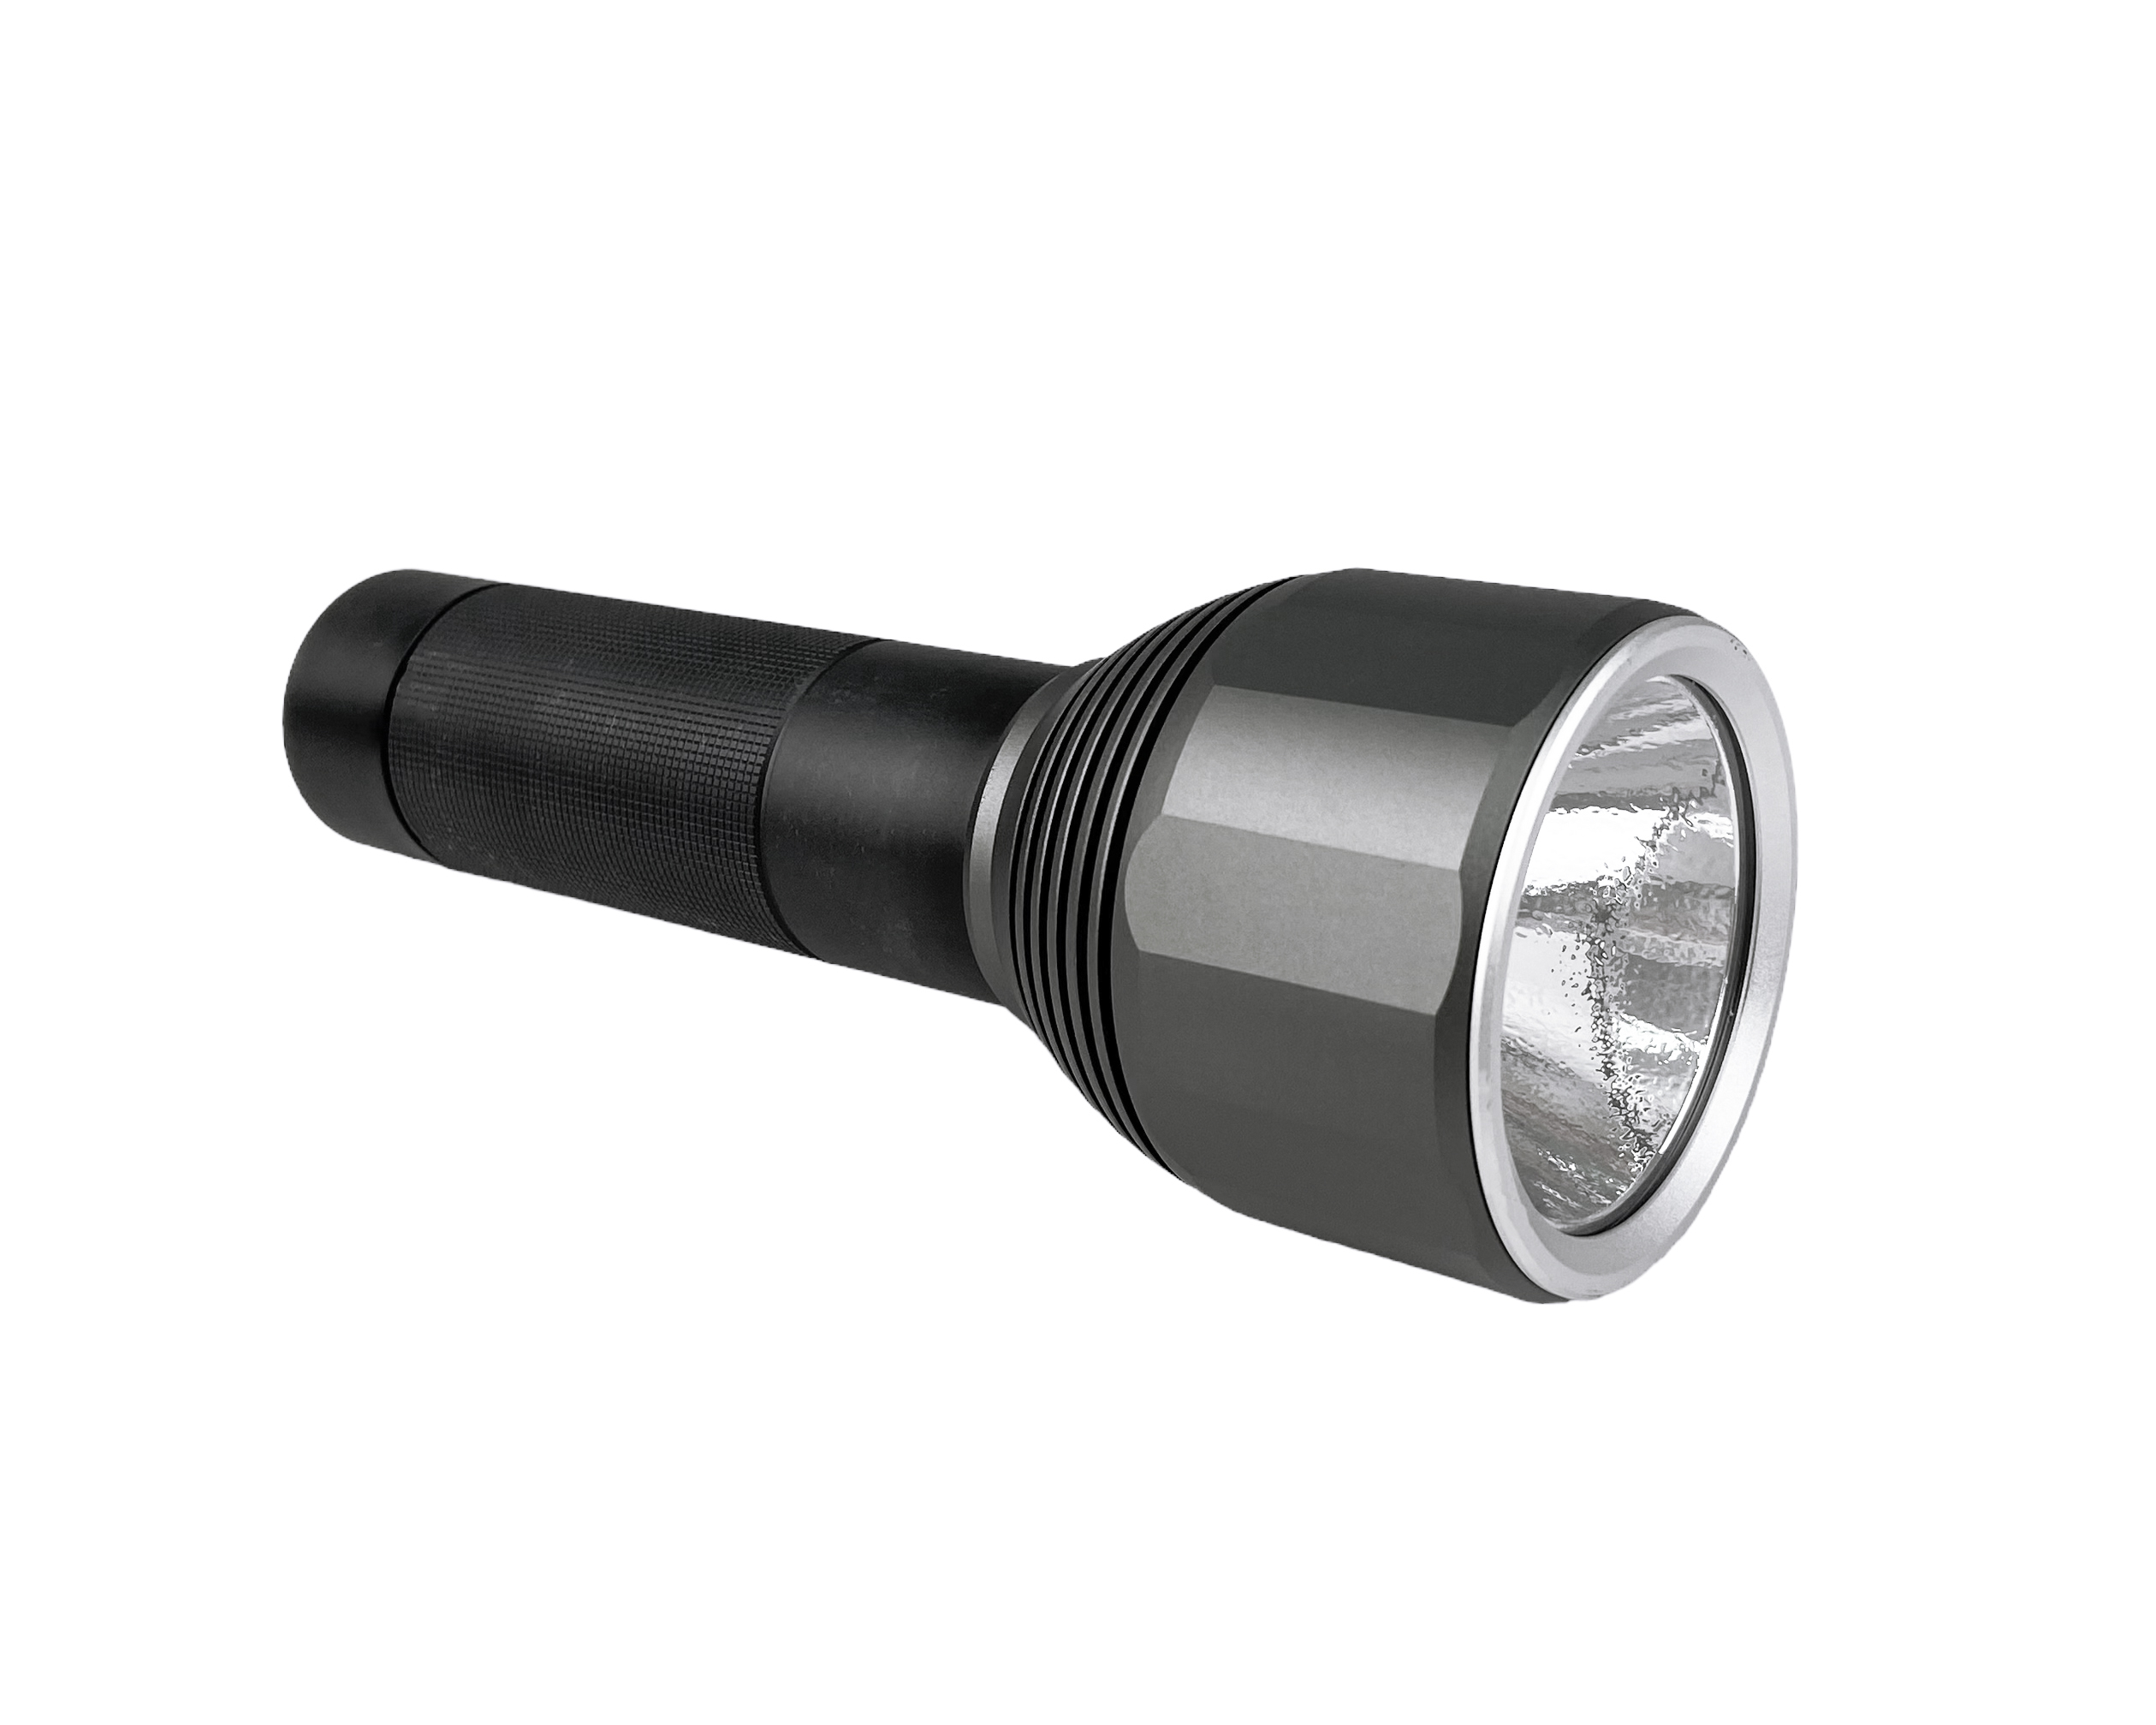 Фонарь NexTool 2000lm flashlight - фото 1